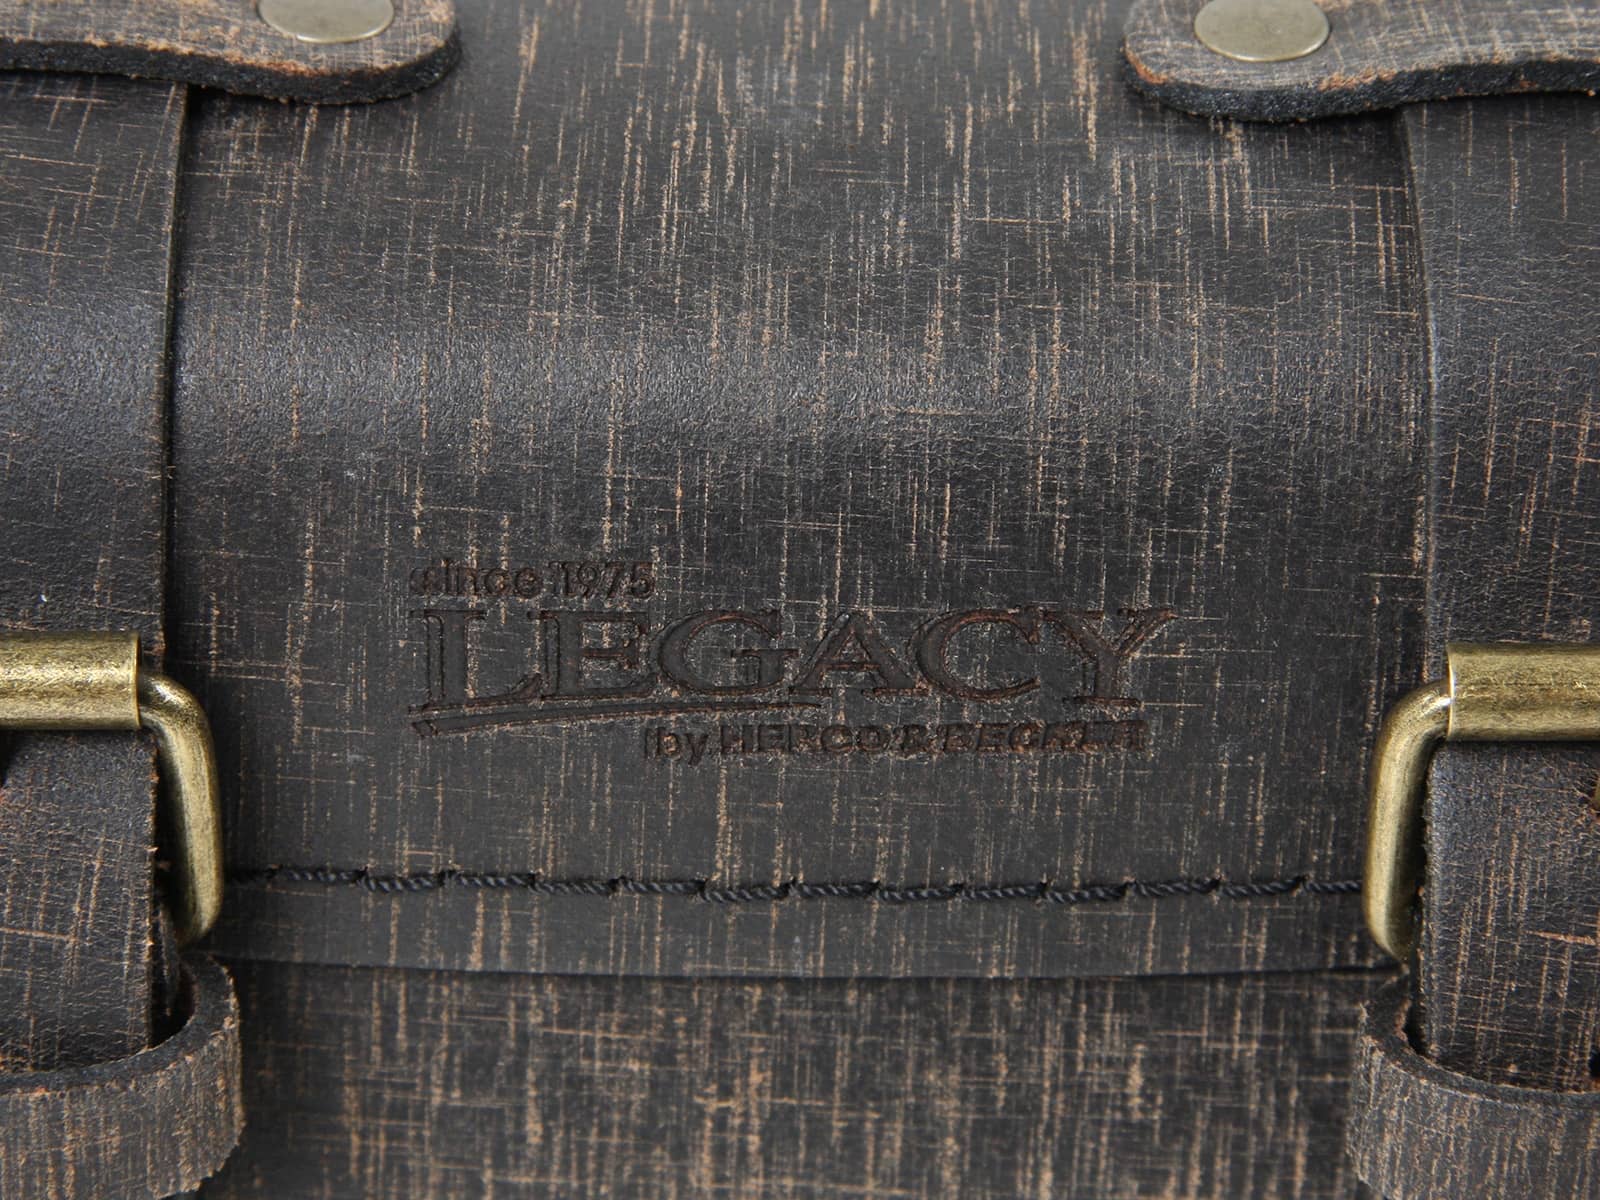 Legacy Rear Bag Leather - rugged